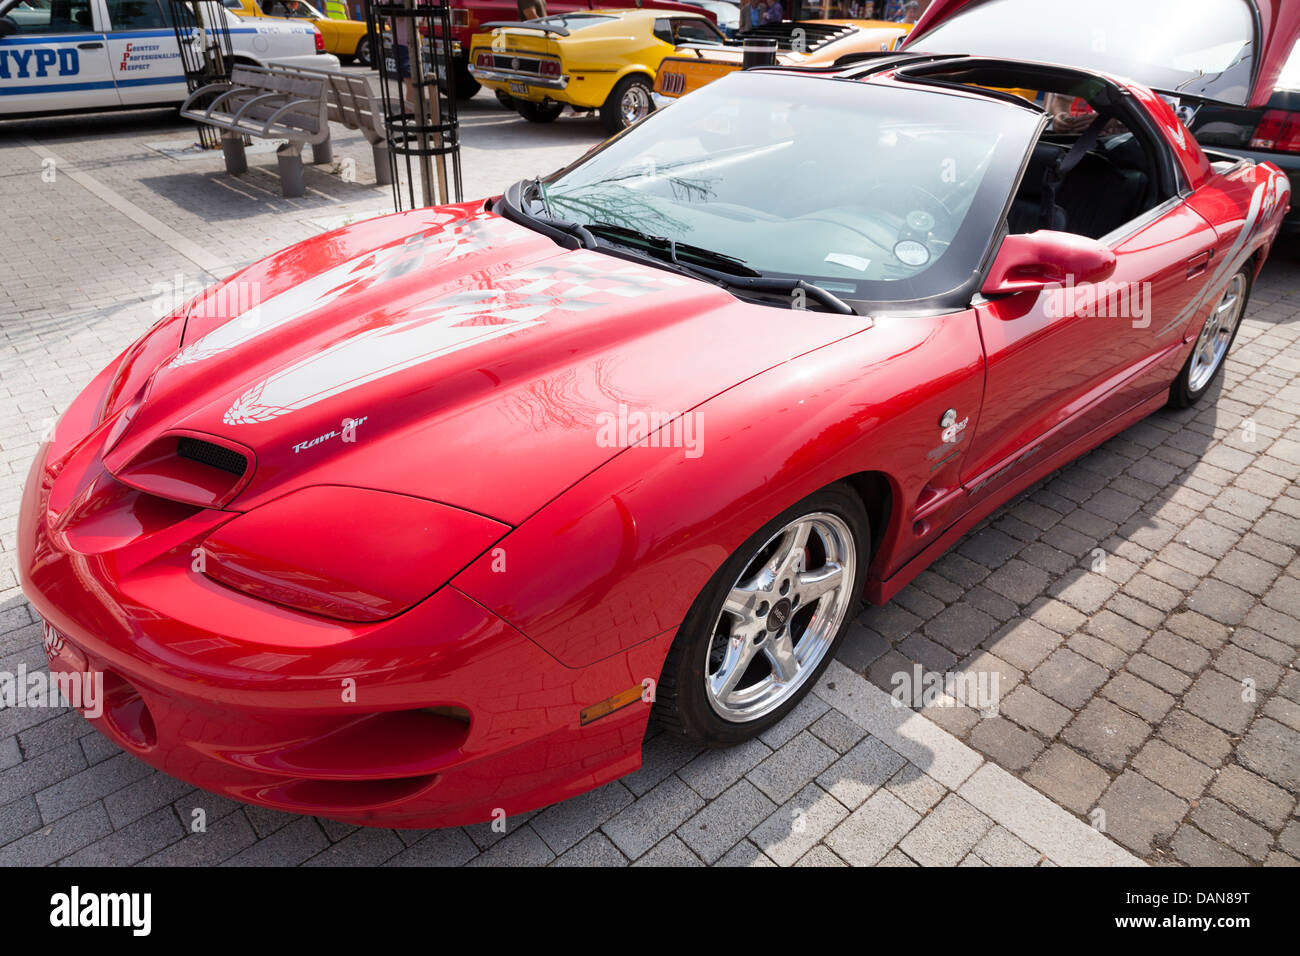 red pontiac trans am at classic car show Stock Photo